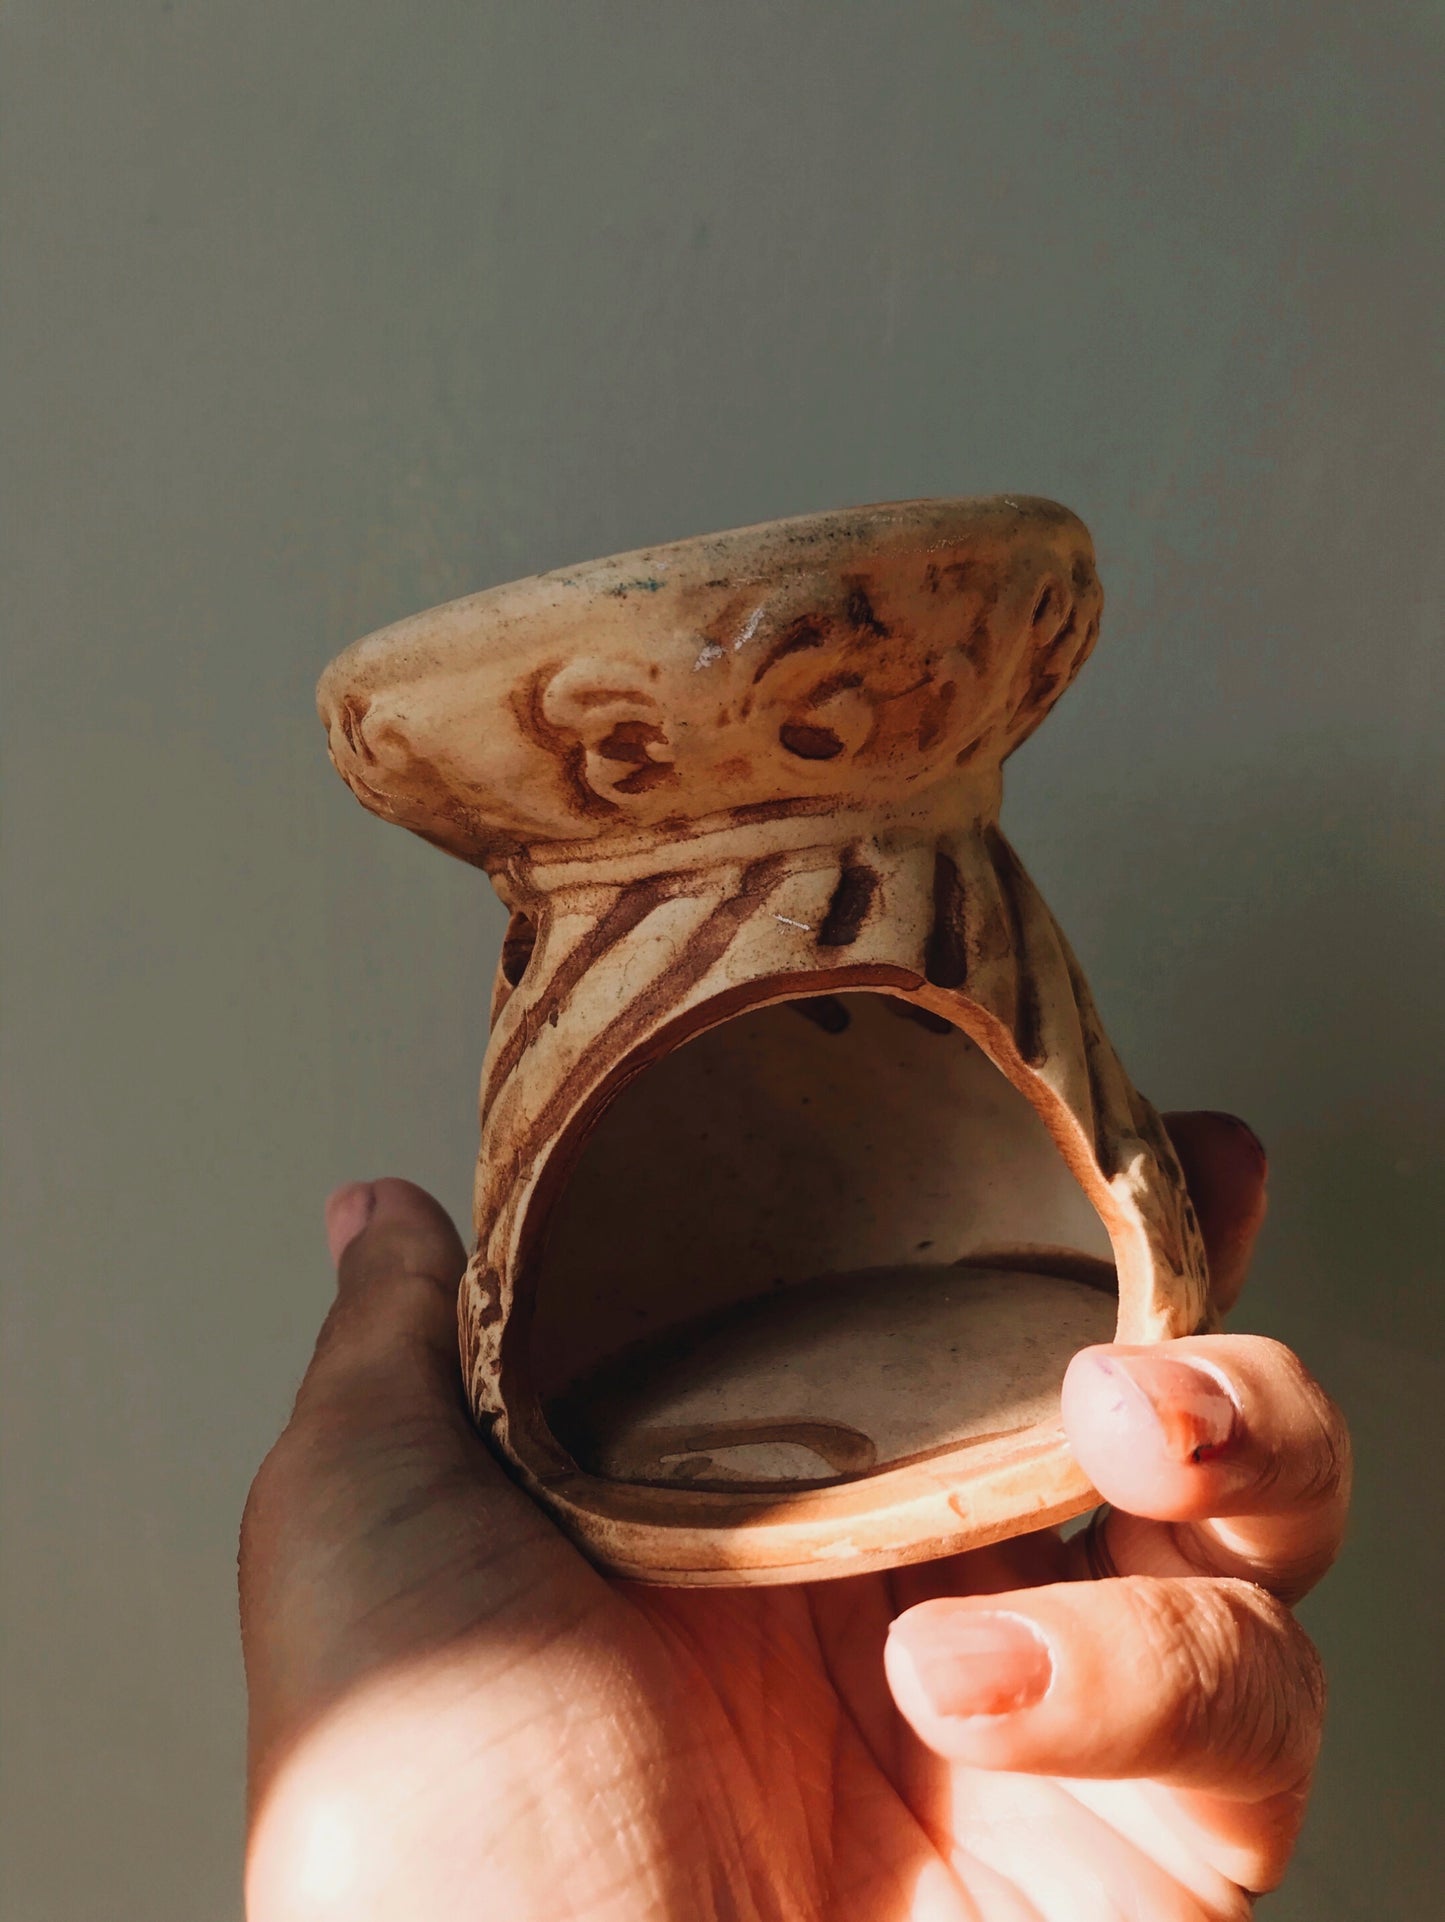 Rustic Handmade Ceramic Burner - Stone & Sage 